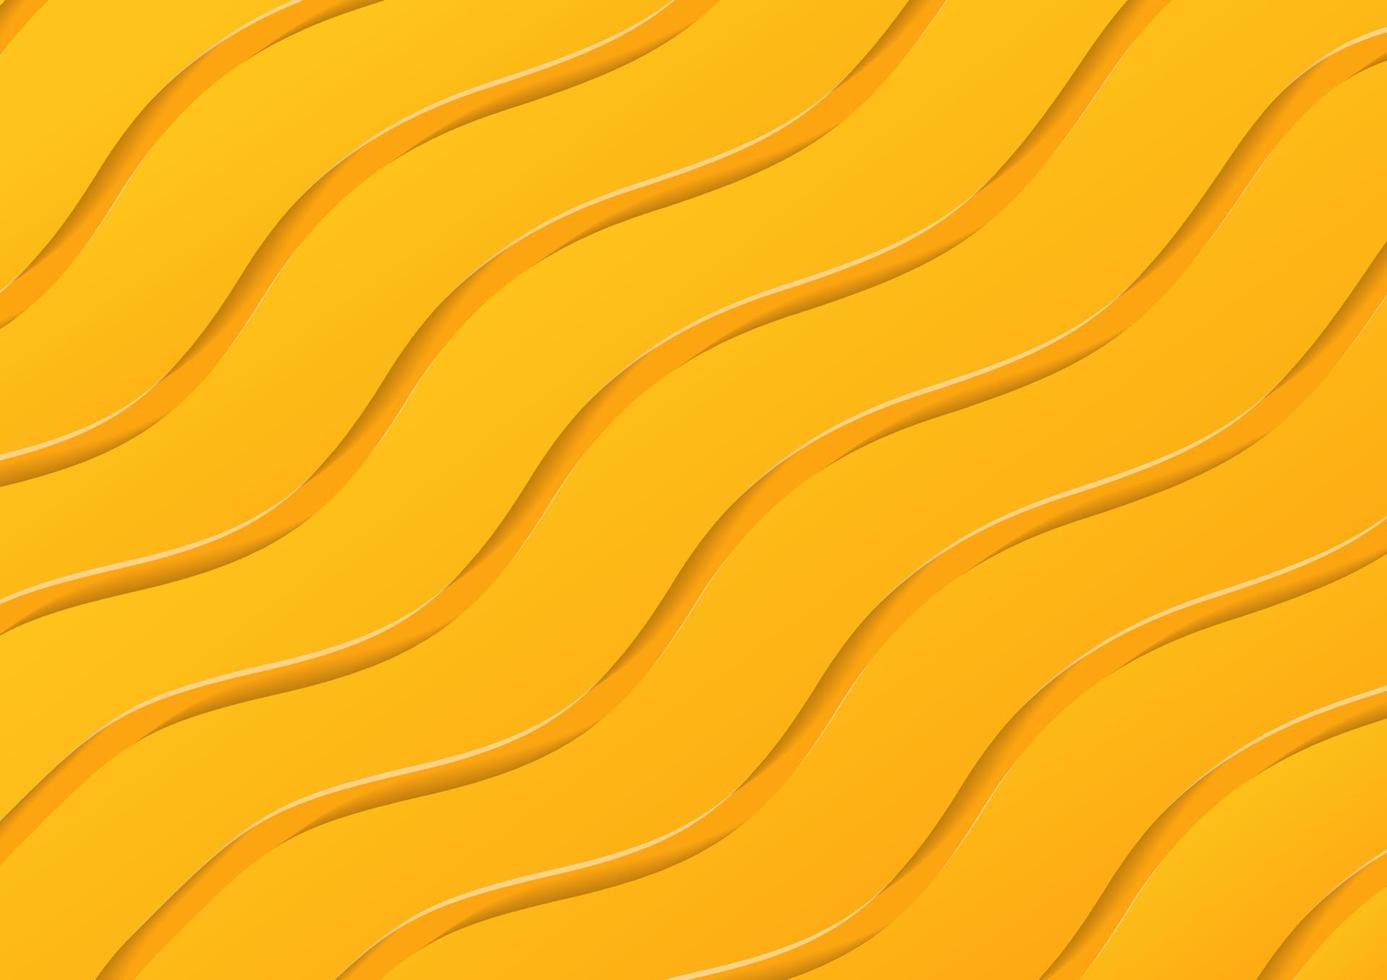 Resumen moderno concepto de fondo de rayas amarillas vector